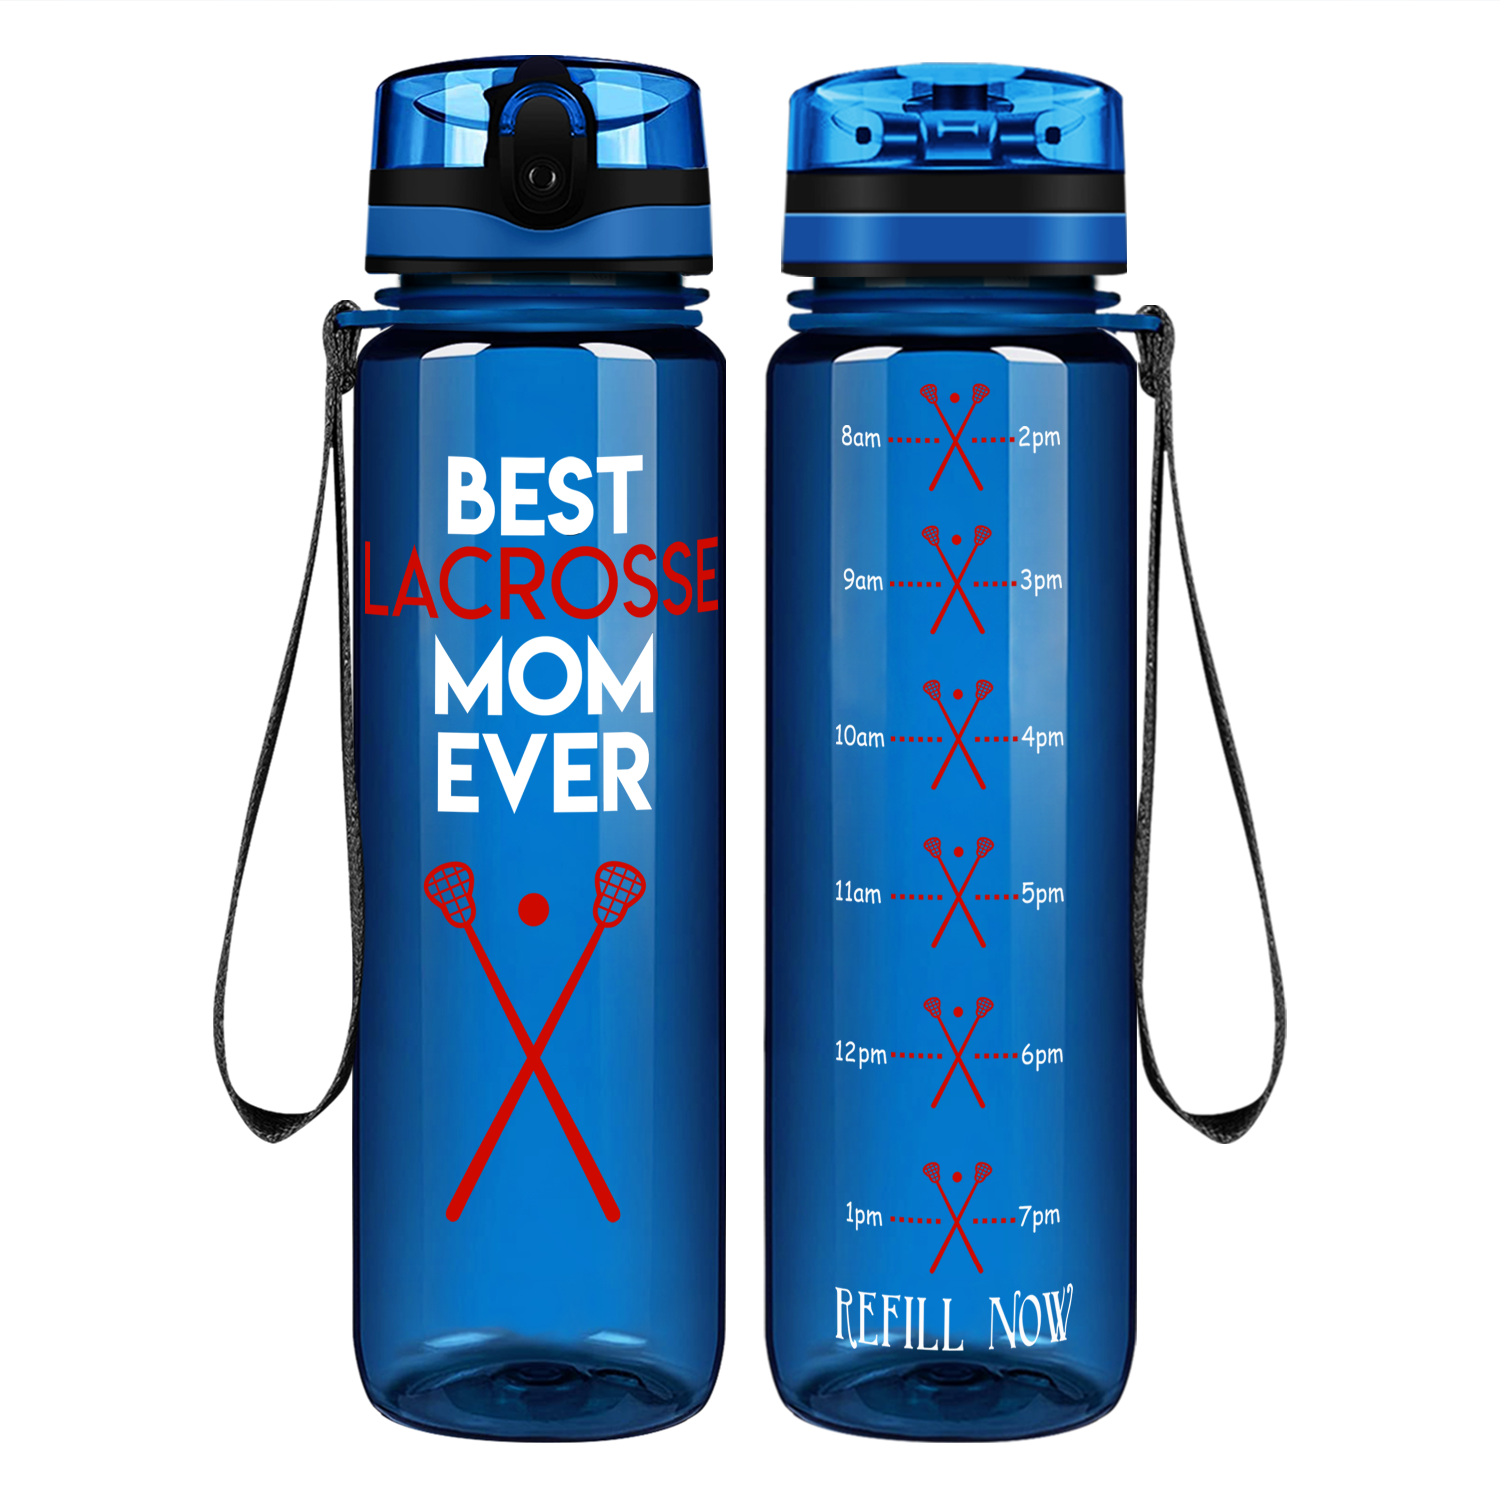 Best Lacrosse Mom Ever on 32 oz Motivational Tracking Water Bottle